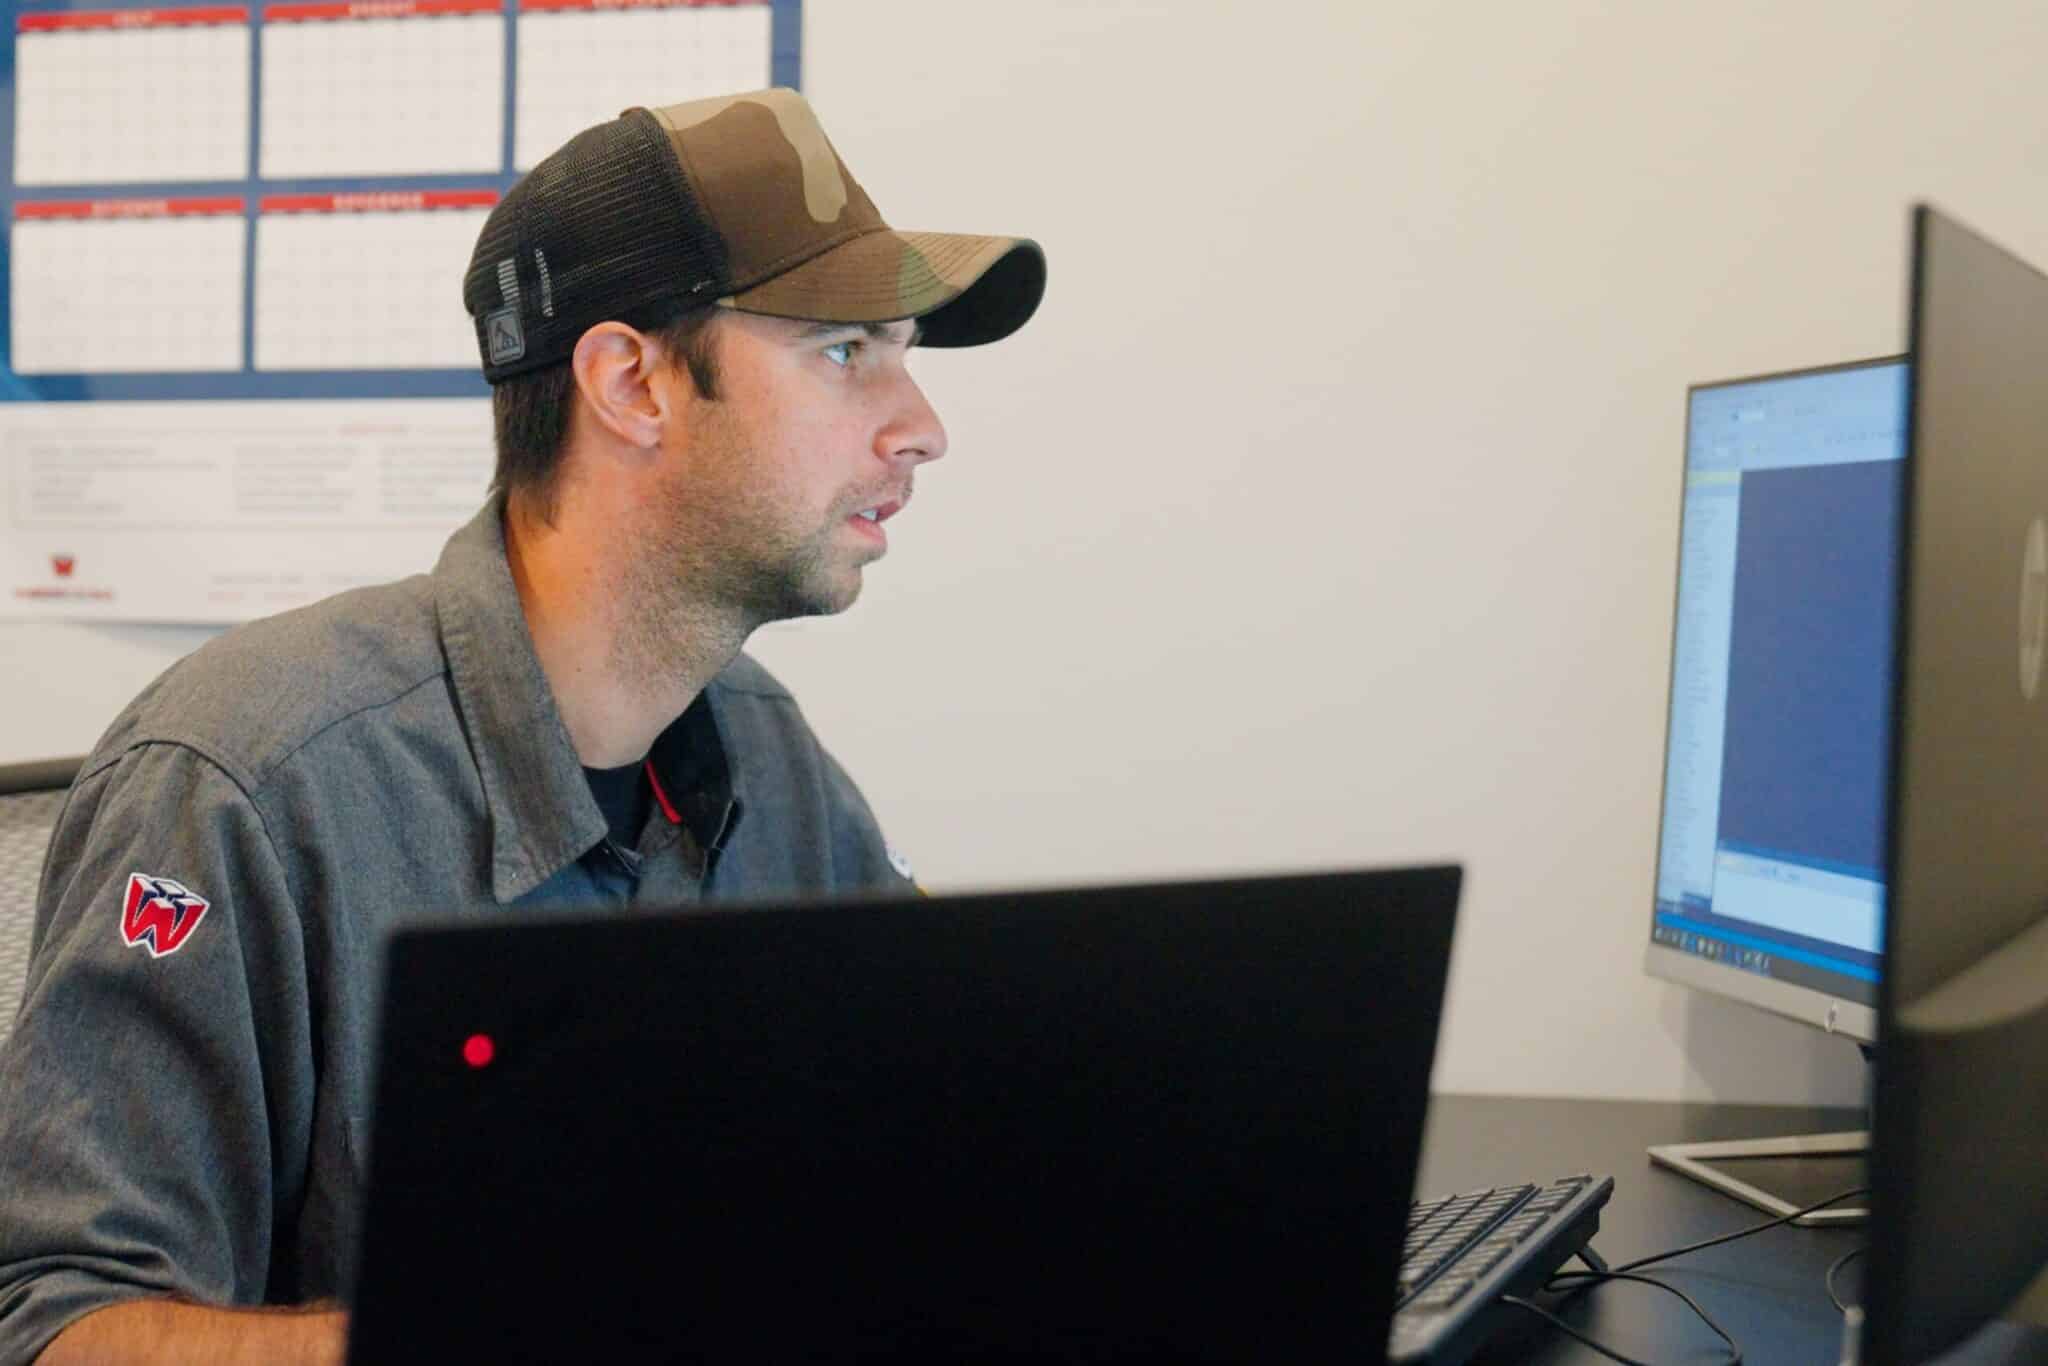 Wescom employee named Calvin looking at computer screen